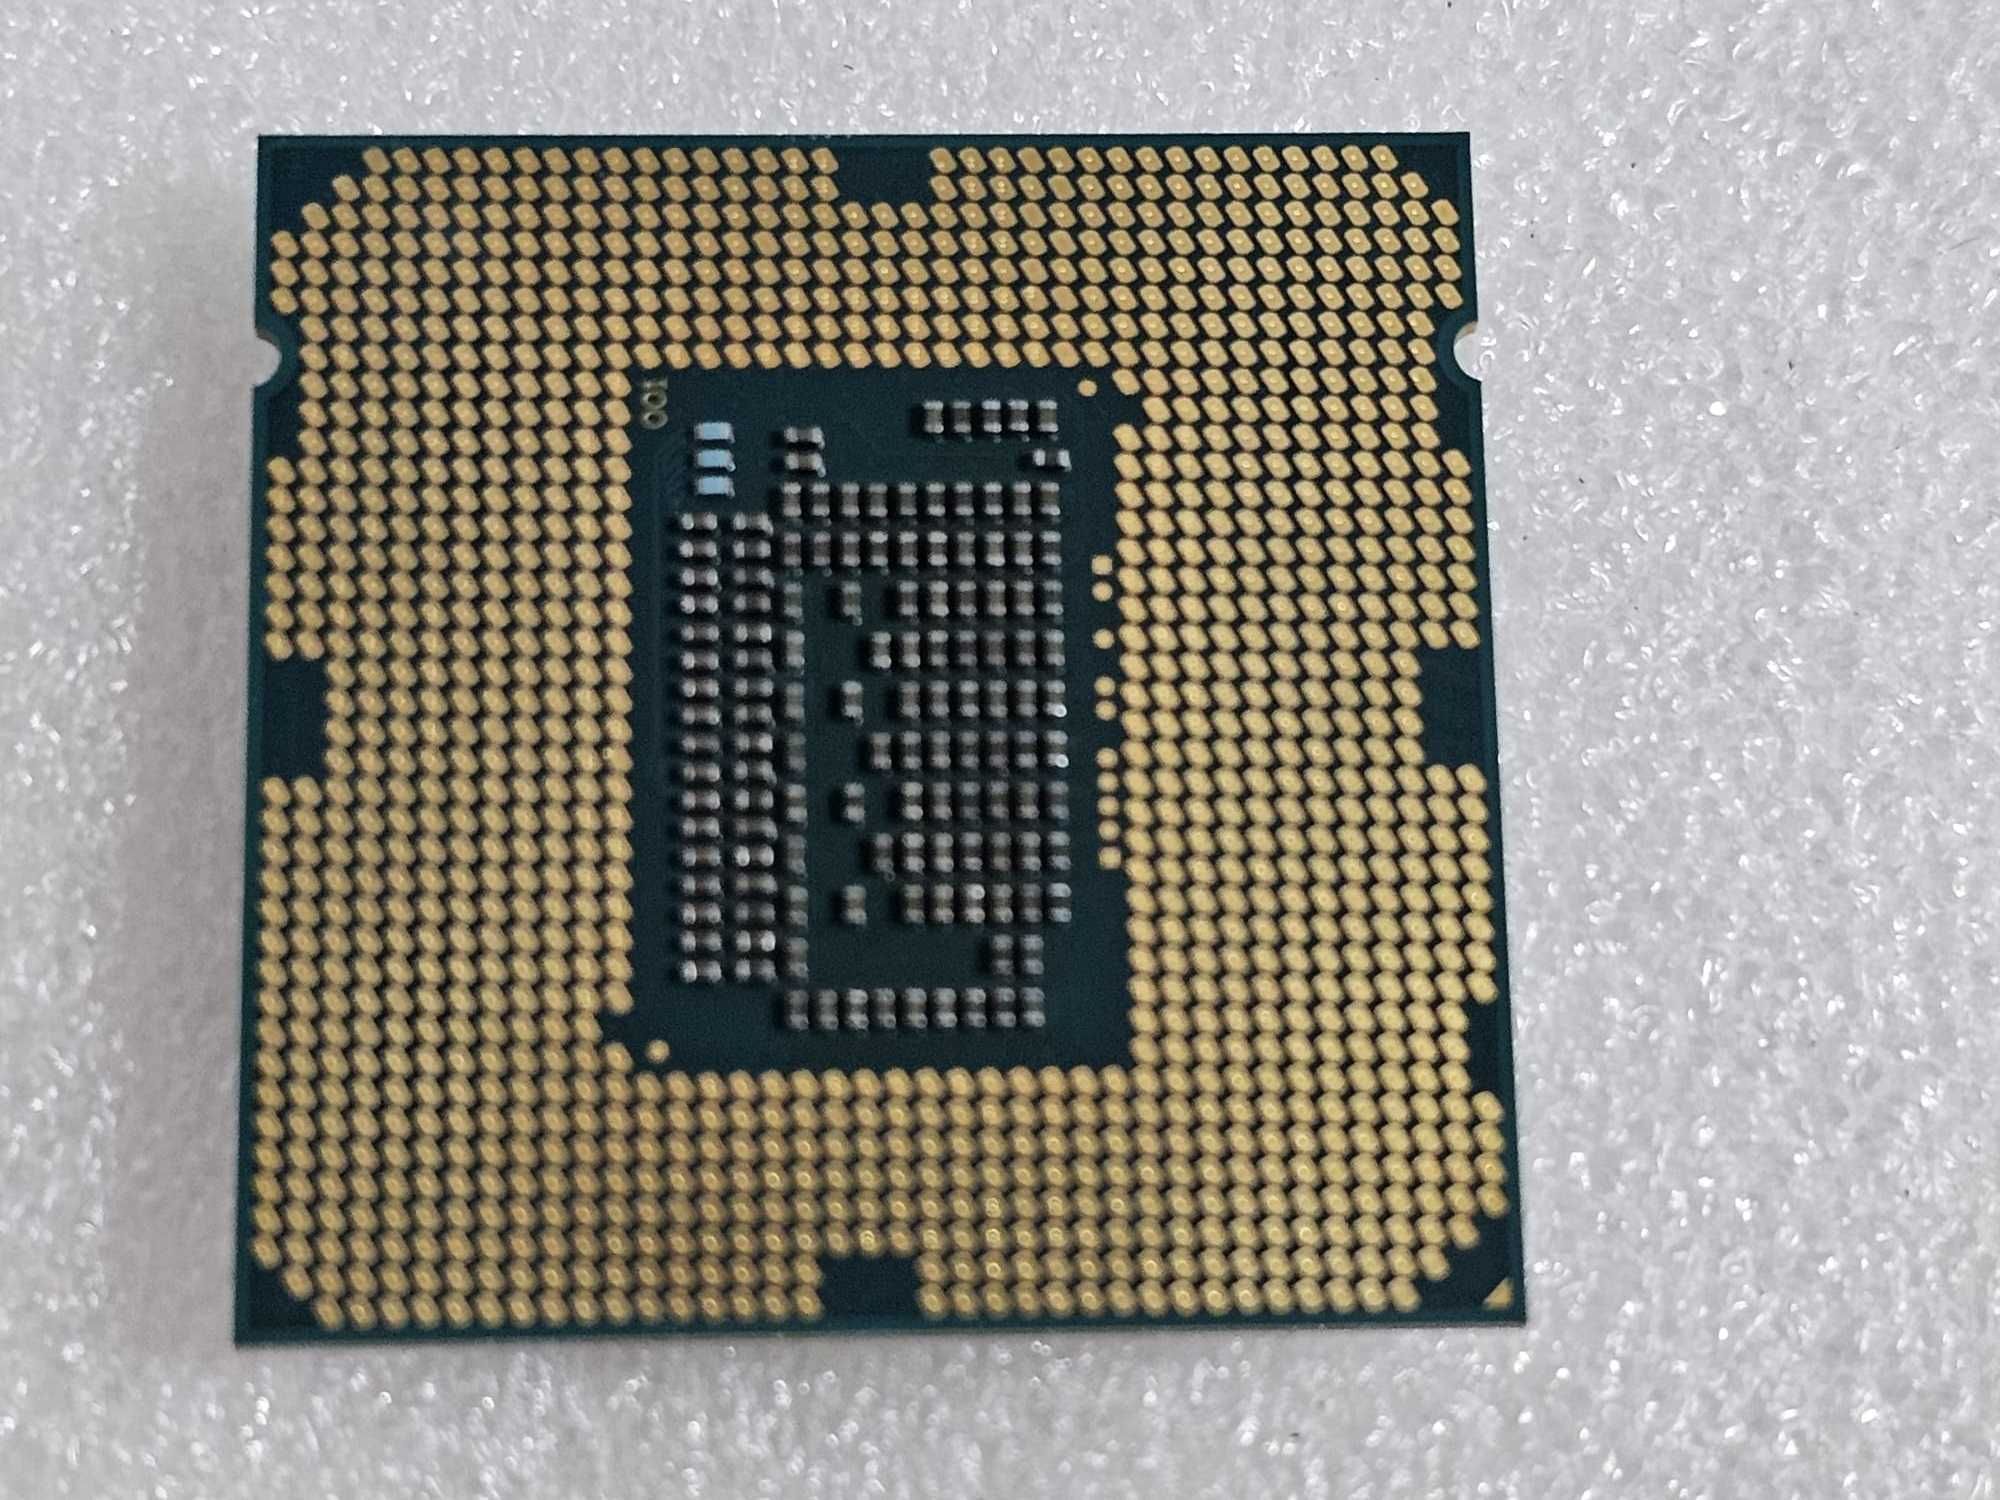 Procesor Intel Core i5 3330, 3.0GHz, 6MB, socket LGA1155 - poze reale